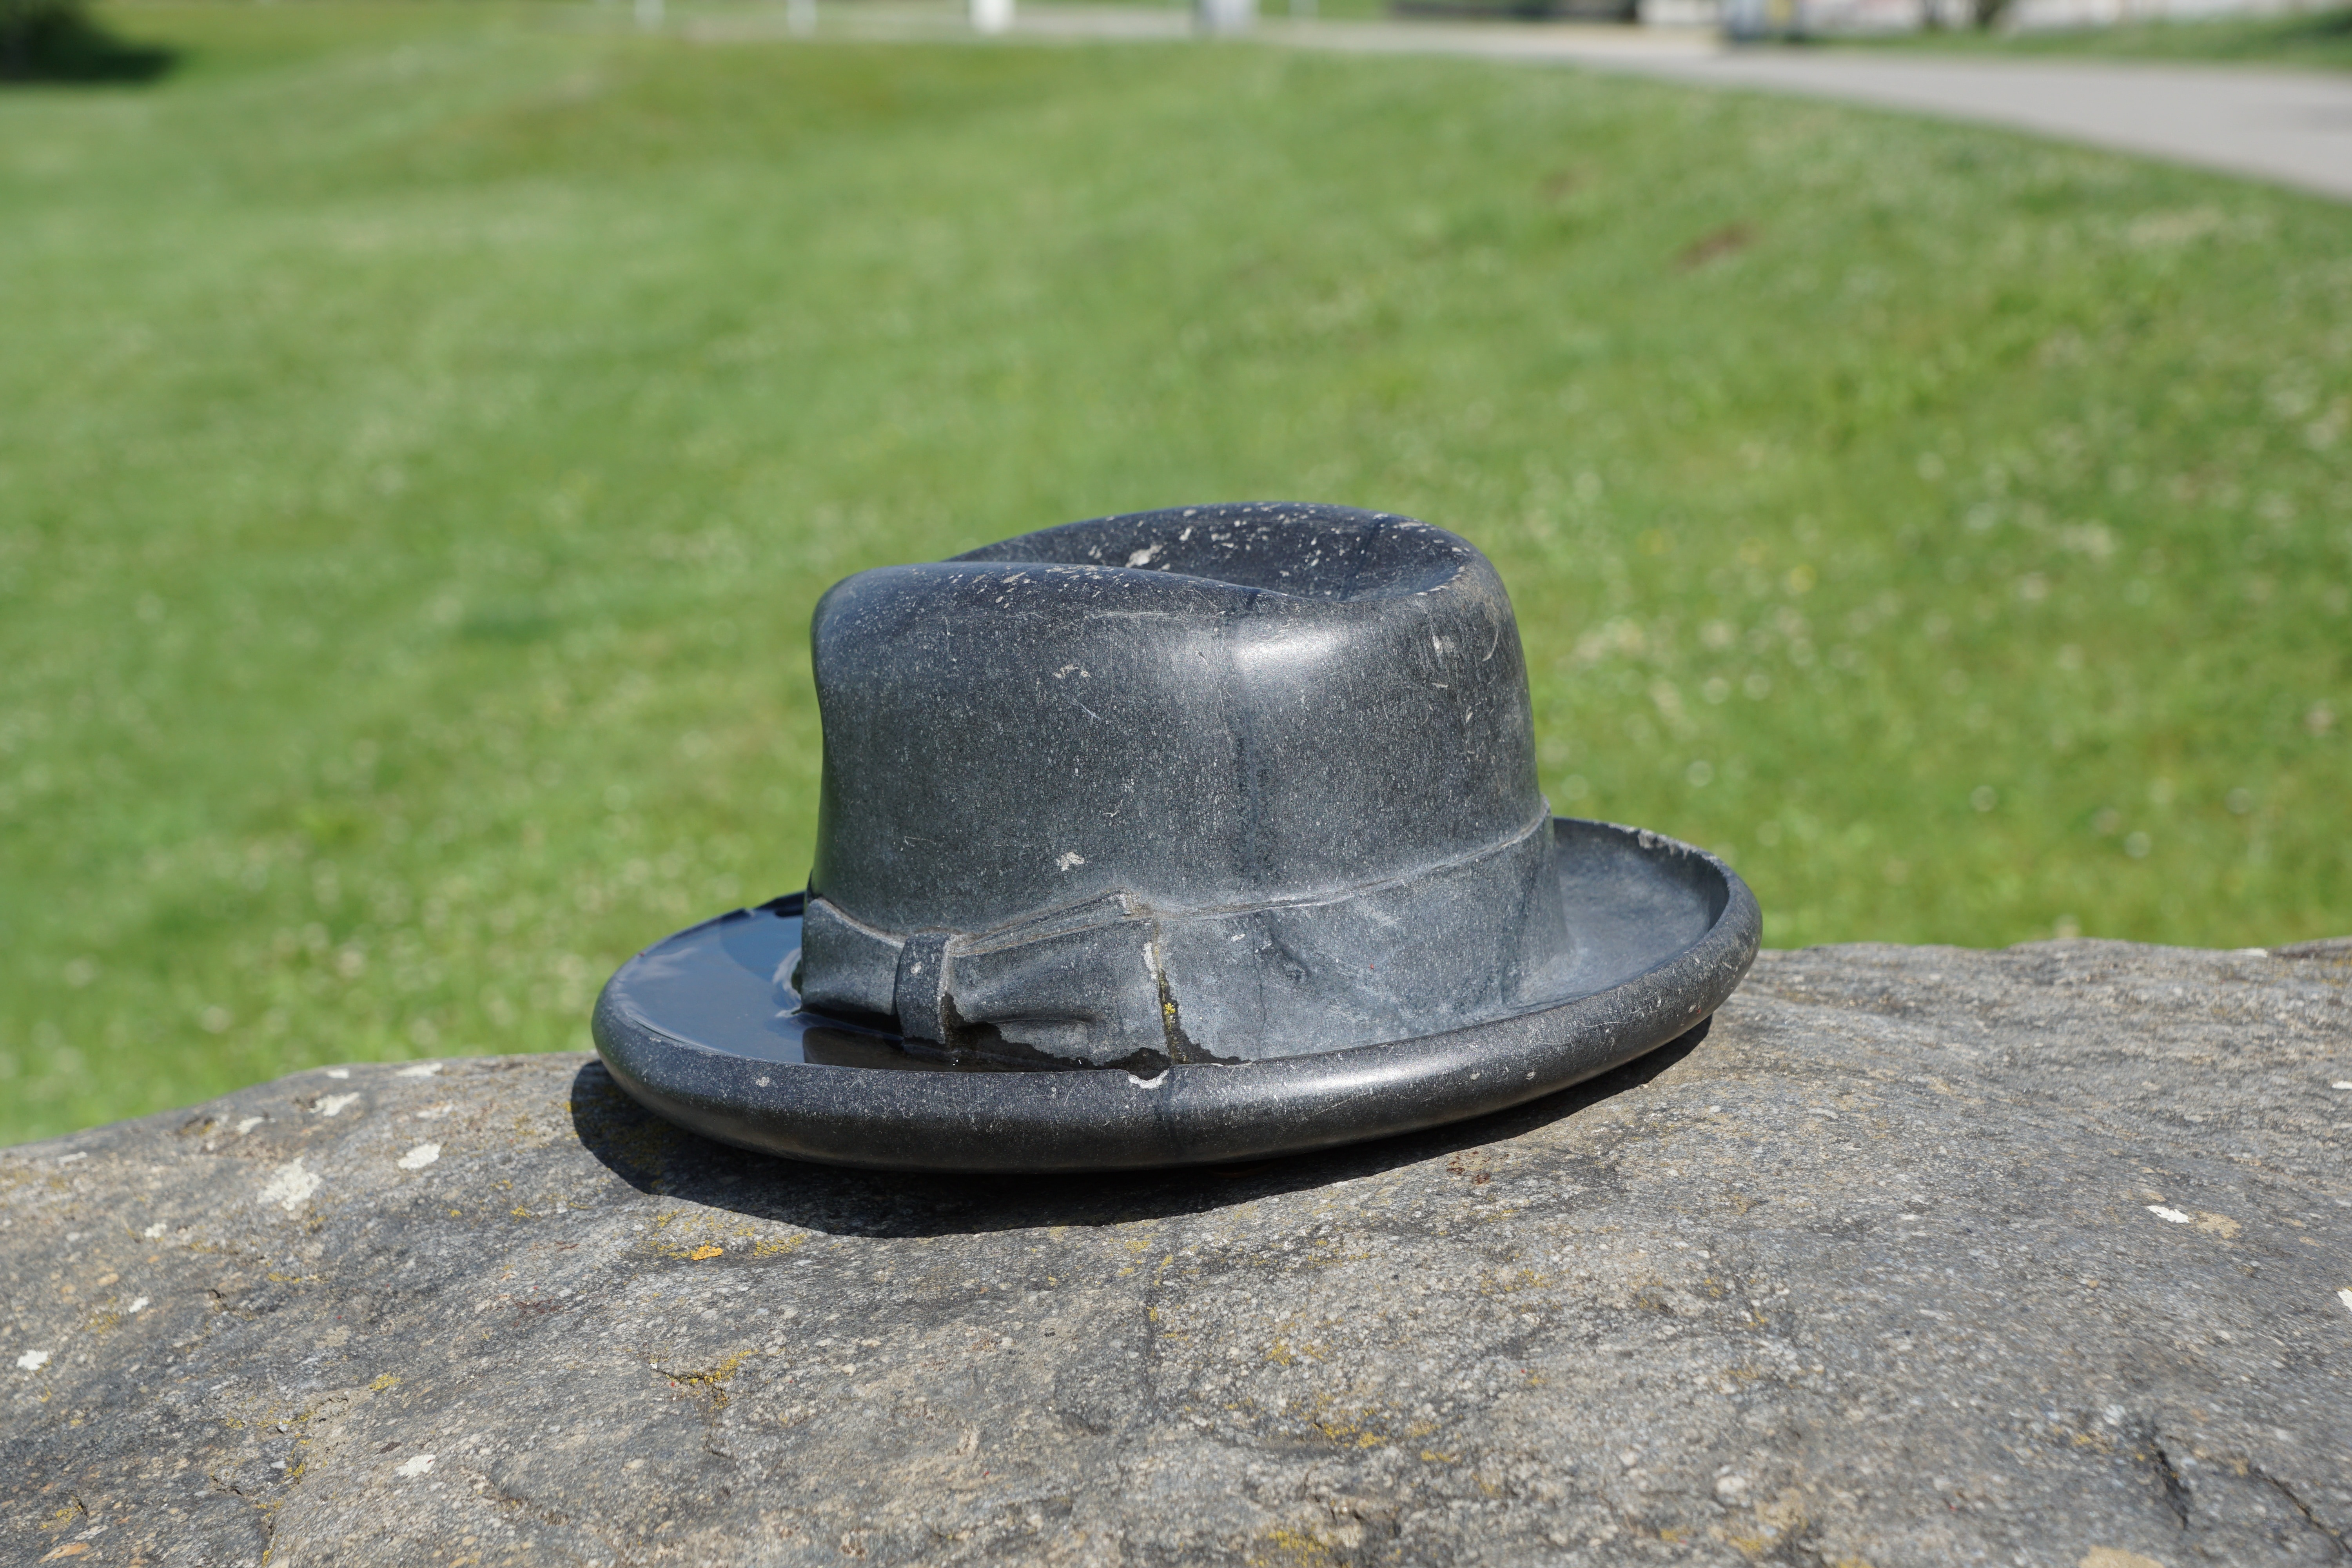 black fedora hat